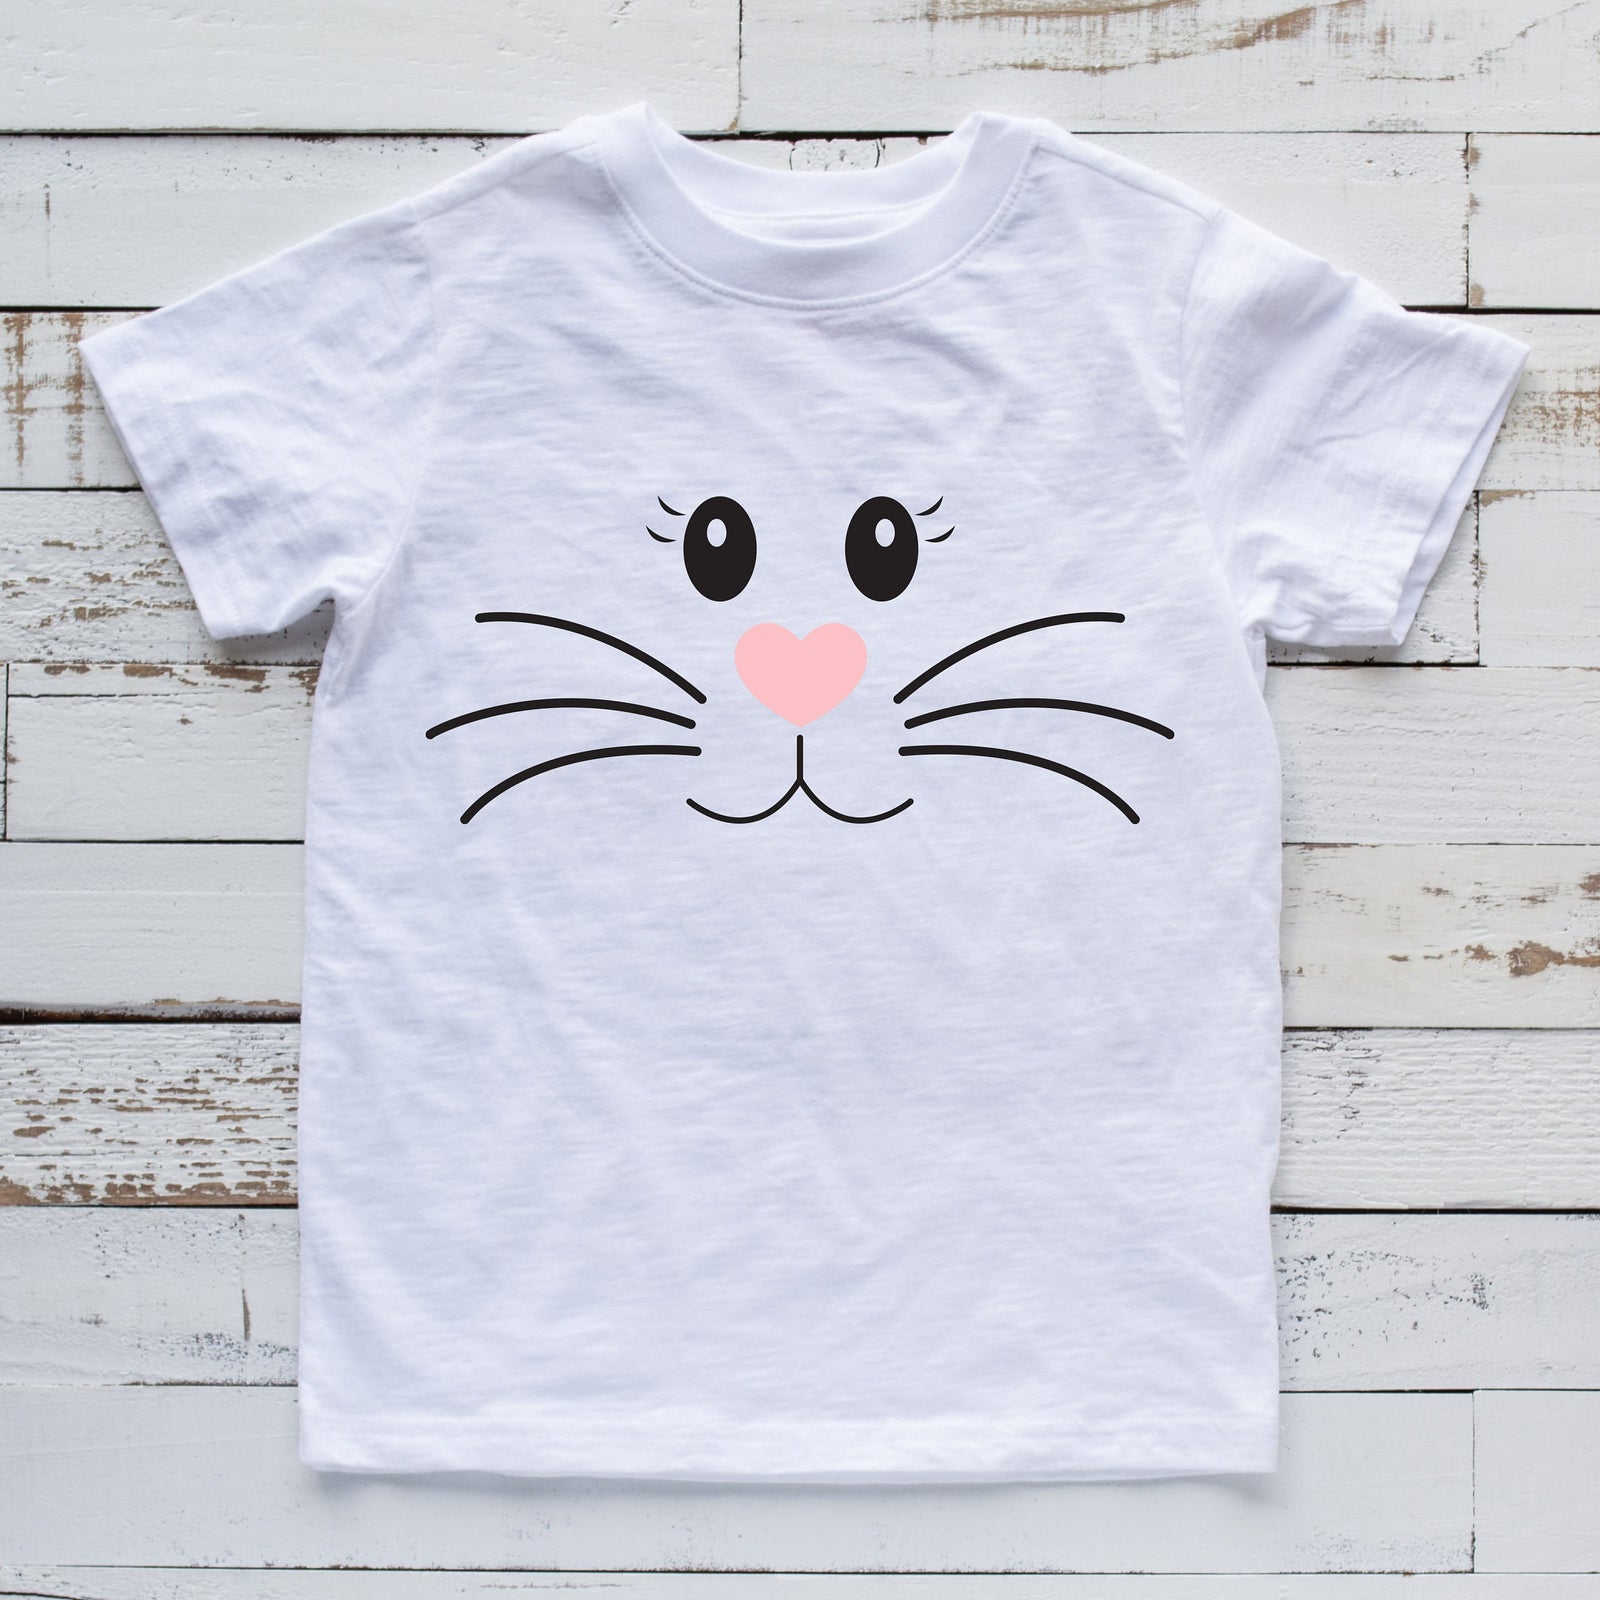 Cute Bunny Shirt - Kids Easter Shirt - Cute Rabbit Shirt - Bunny Face with Whiskers - Custom Boy or Girl